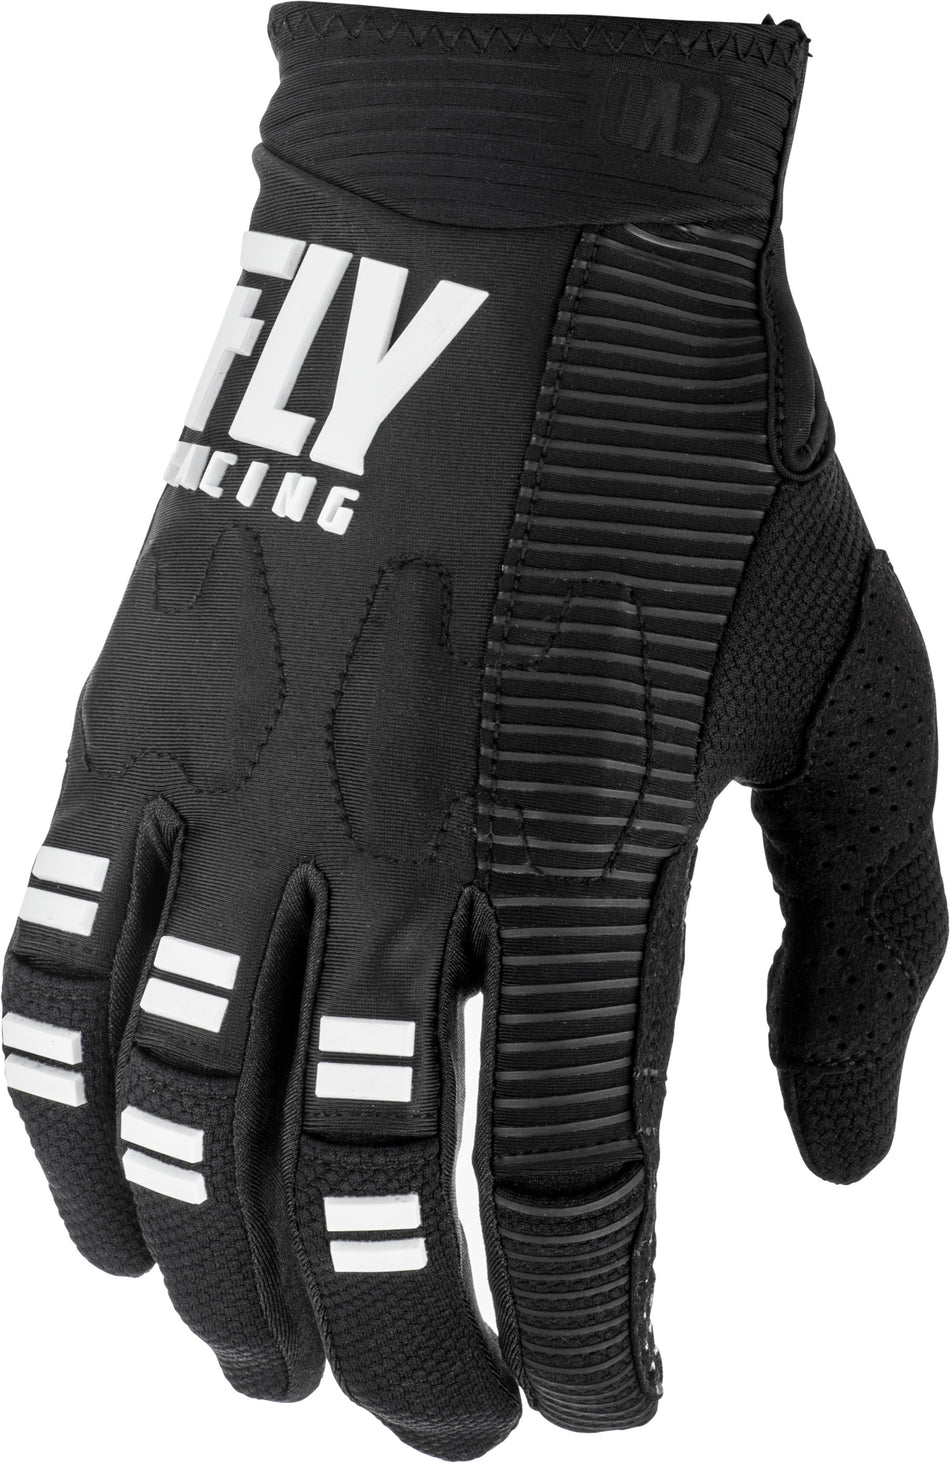 FLY RACING Evolution Dst Gloves Black/White Sz 06 372-11006